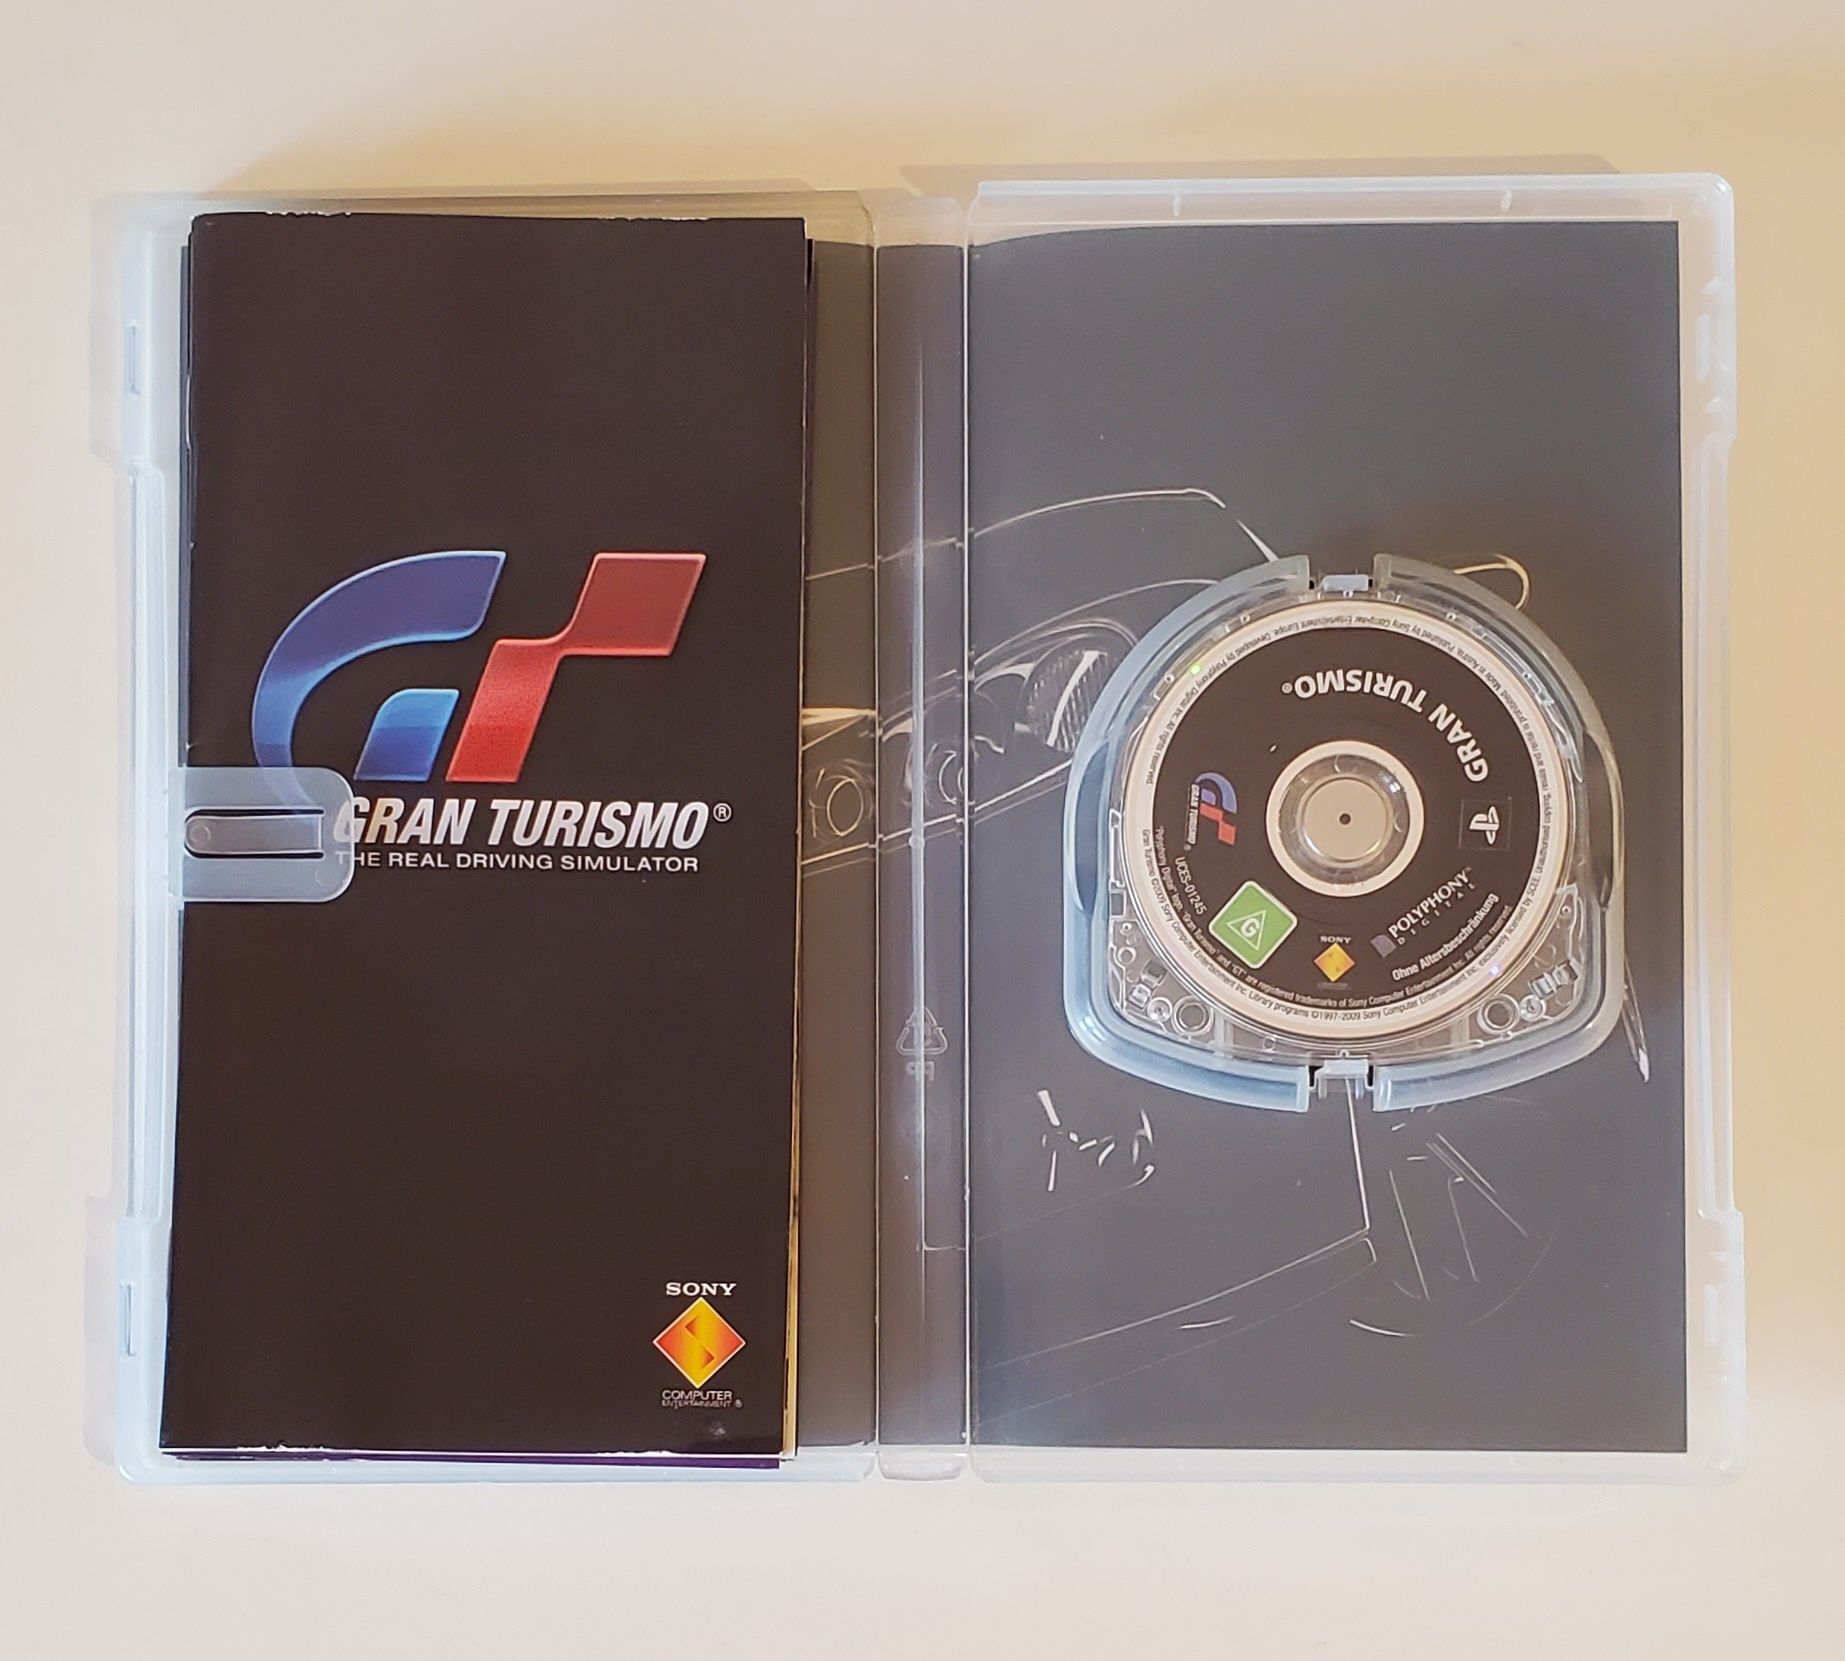 Gran Turismo Ed. Coleccionador | PLAYSTATION Portable (PSP) | Completo